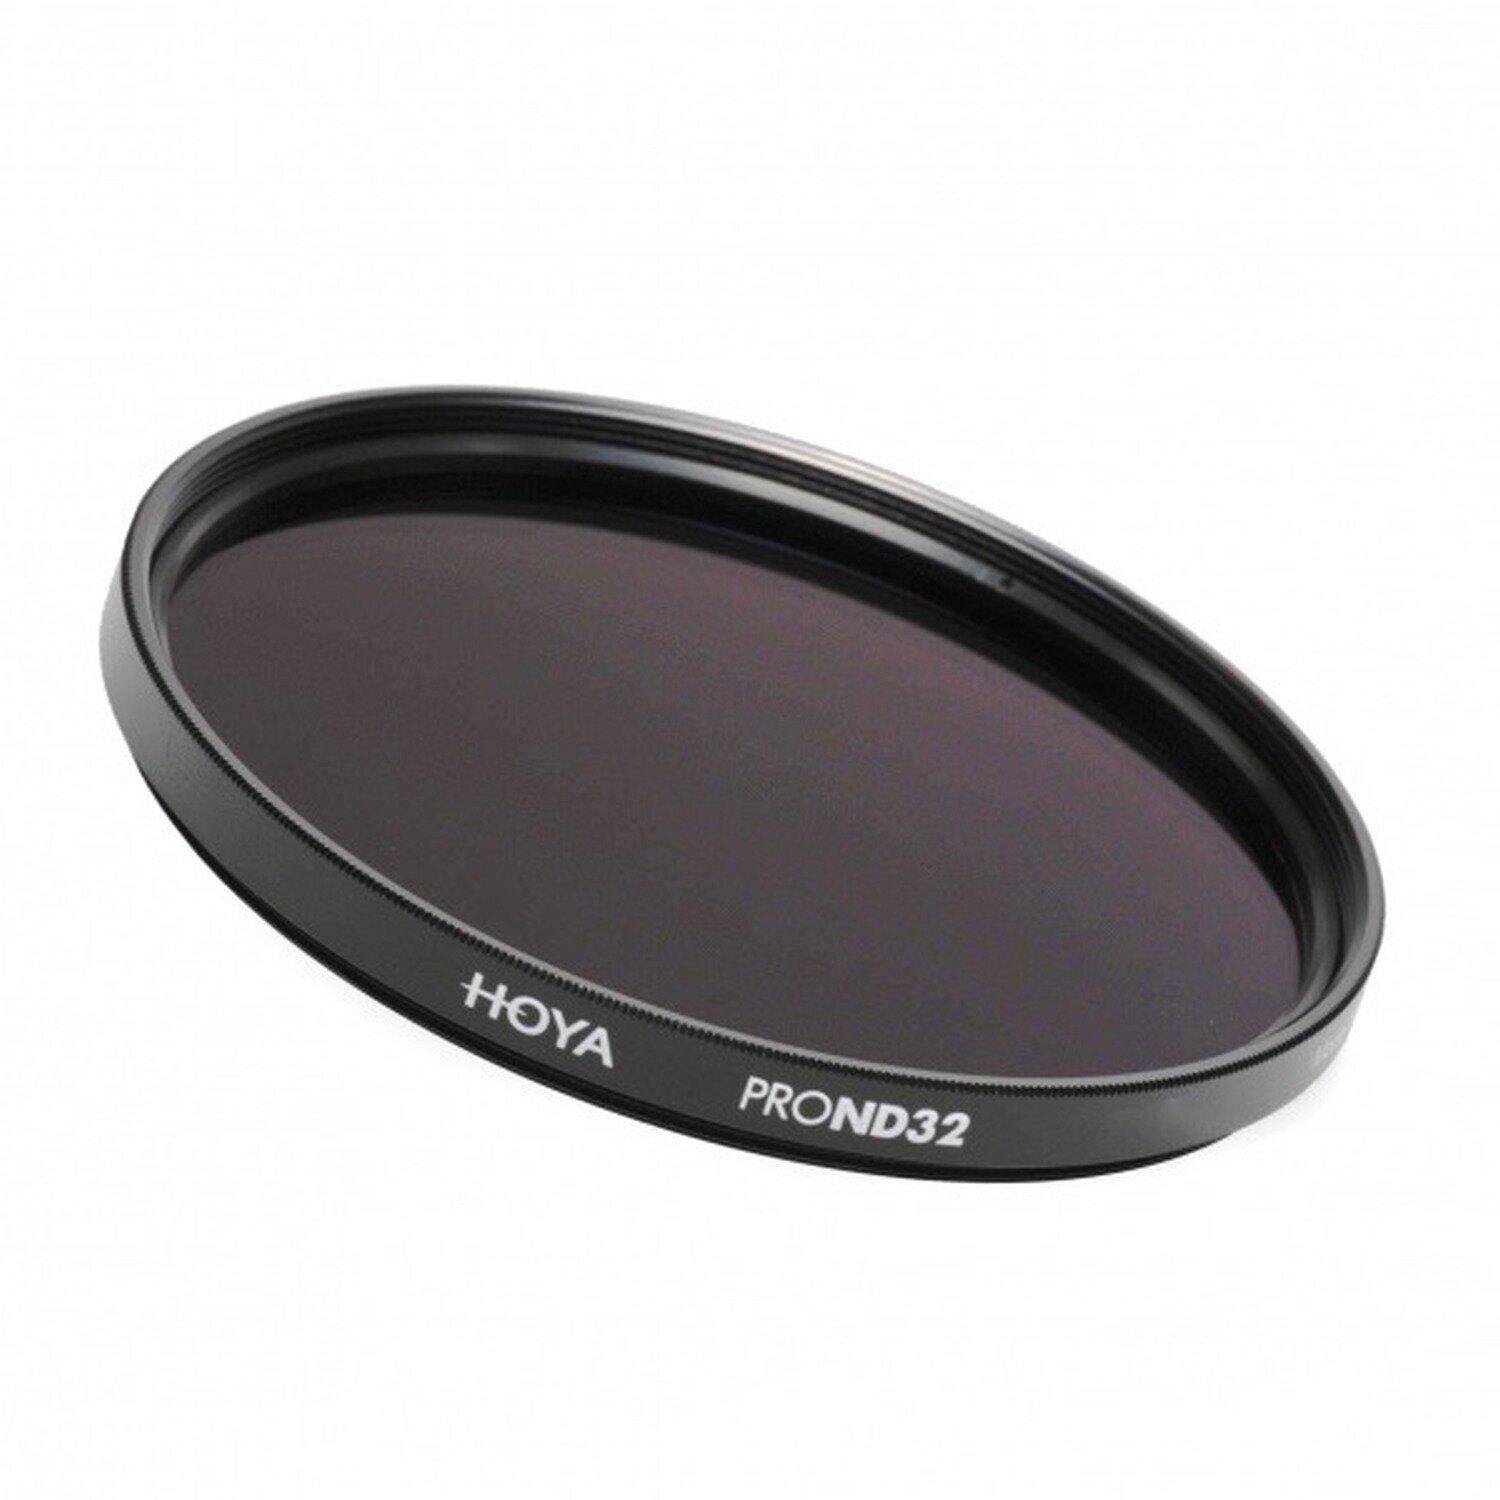 Hoya Filter PRO ND 32 55mm